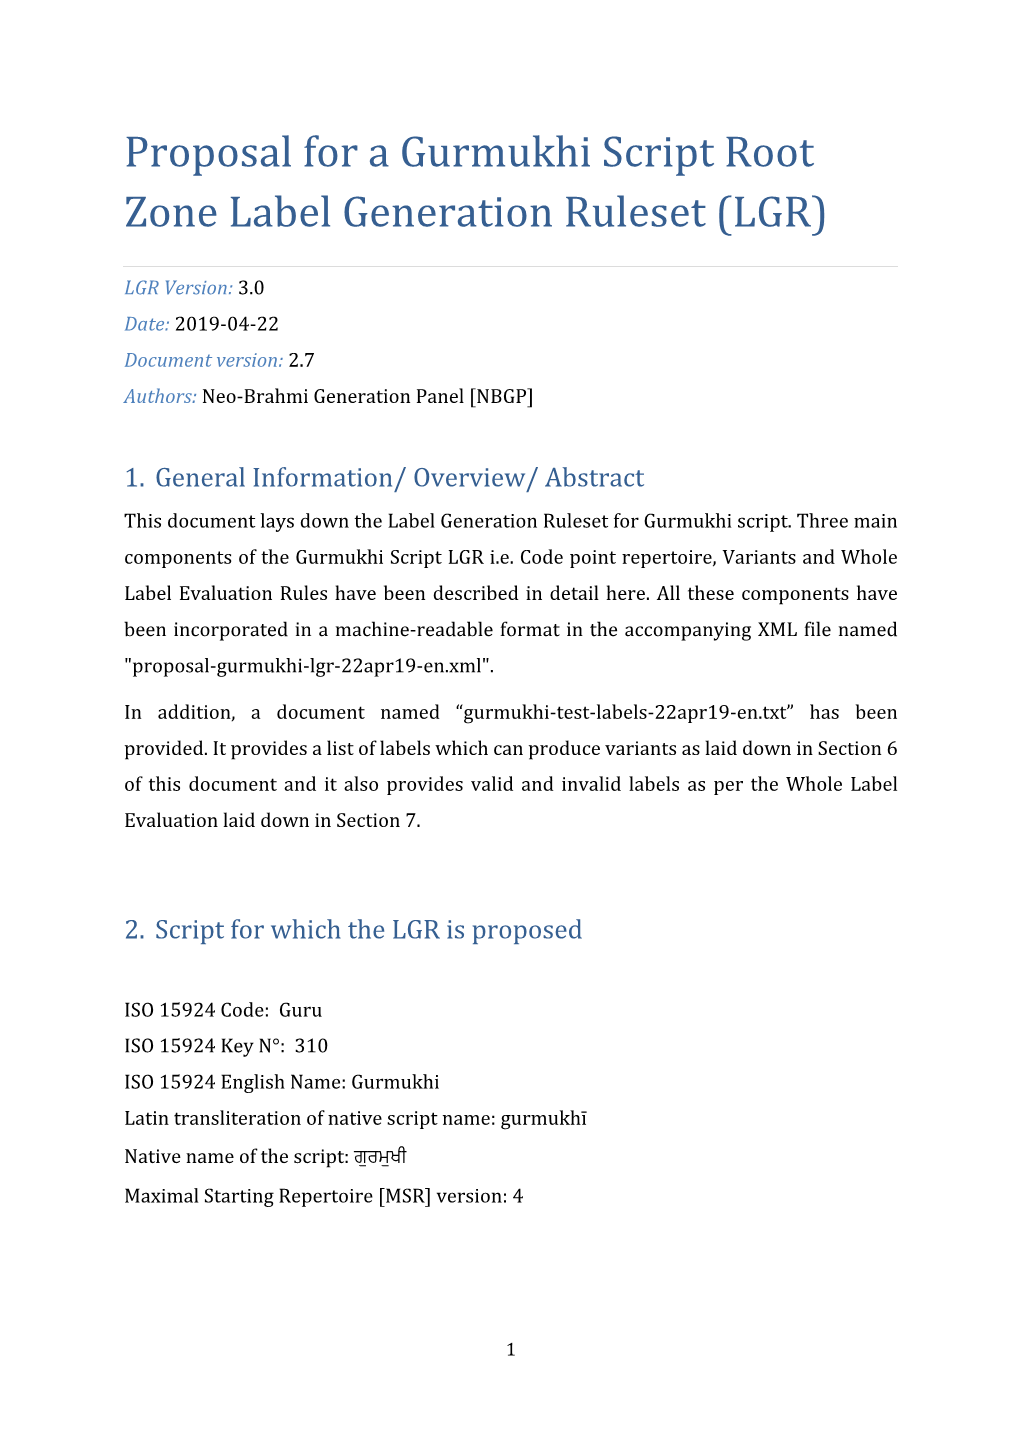 Proposal for a Gurmukhi Script Root Zone Label Generation Ruleset (LGR)